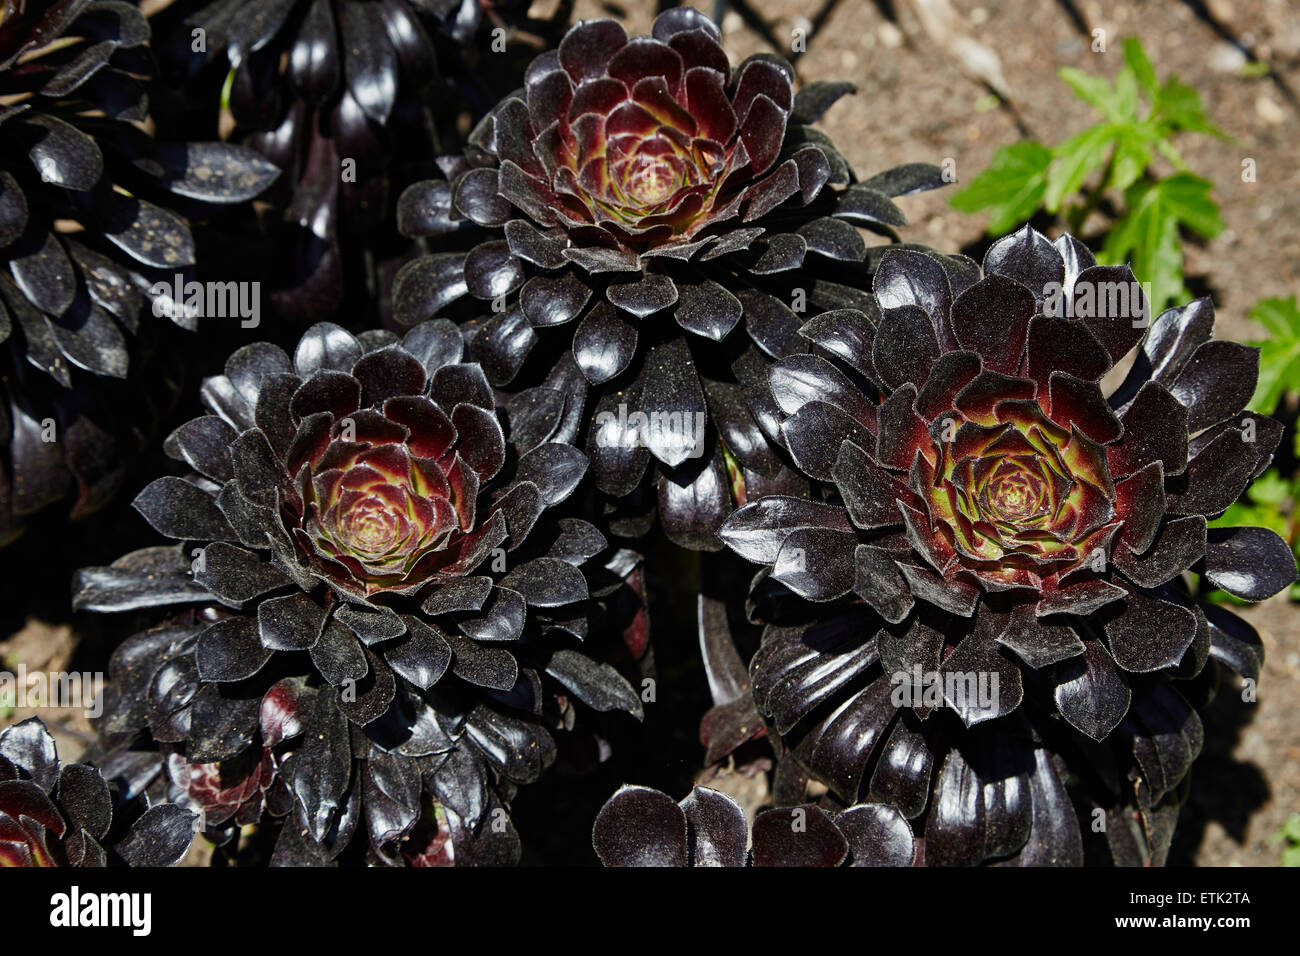 Aeonium arboreum,variety Zwarkop,in a group Stock Photo